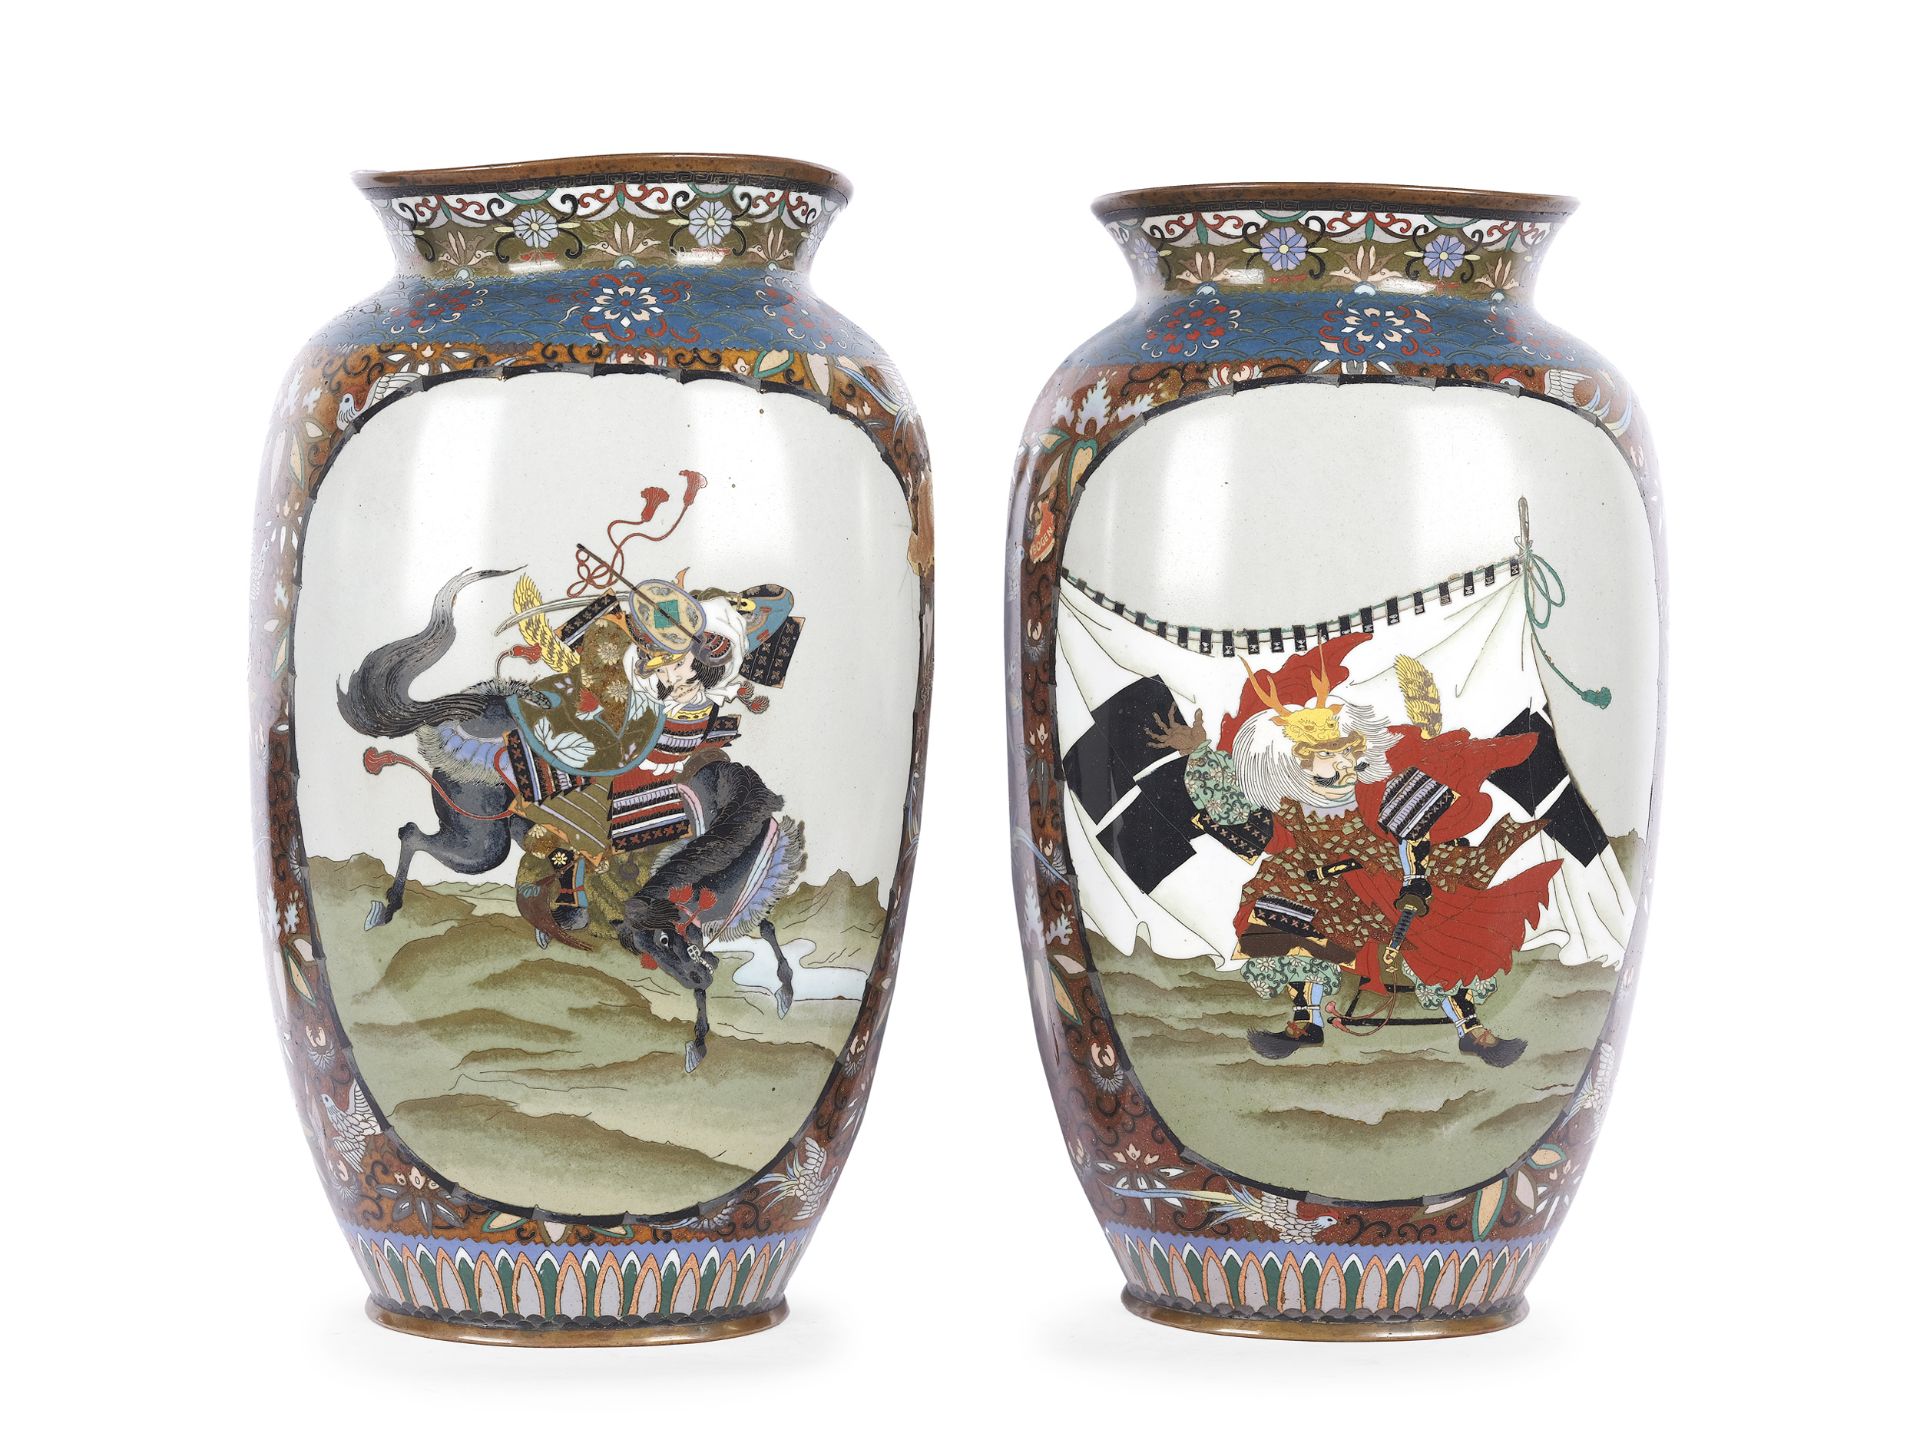 Pair of cloisonné vases, Japan, Meiji period, 1868-1912 - Image 3 of 5